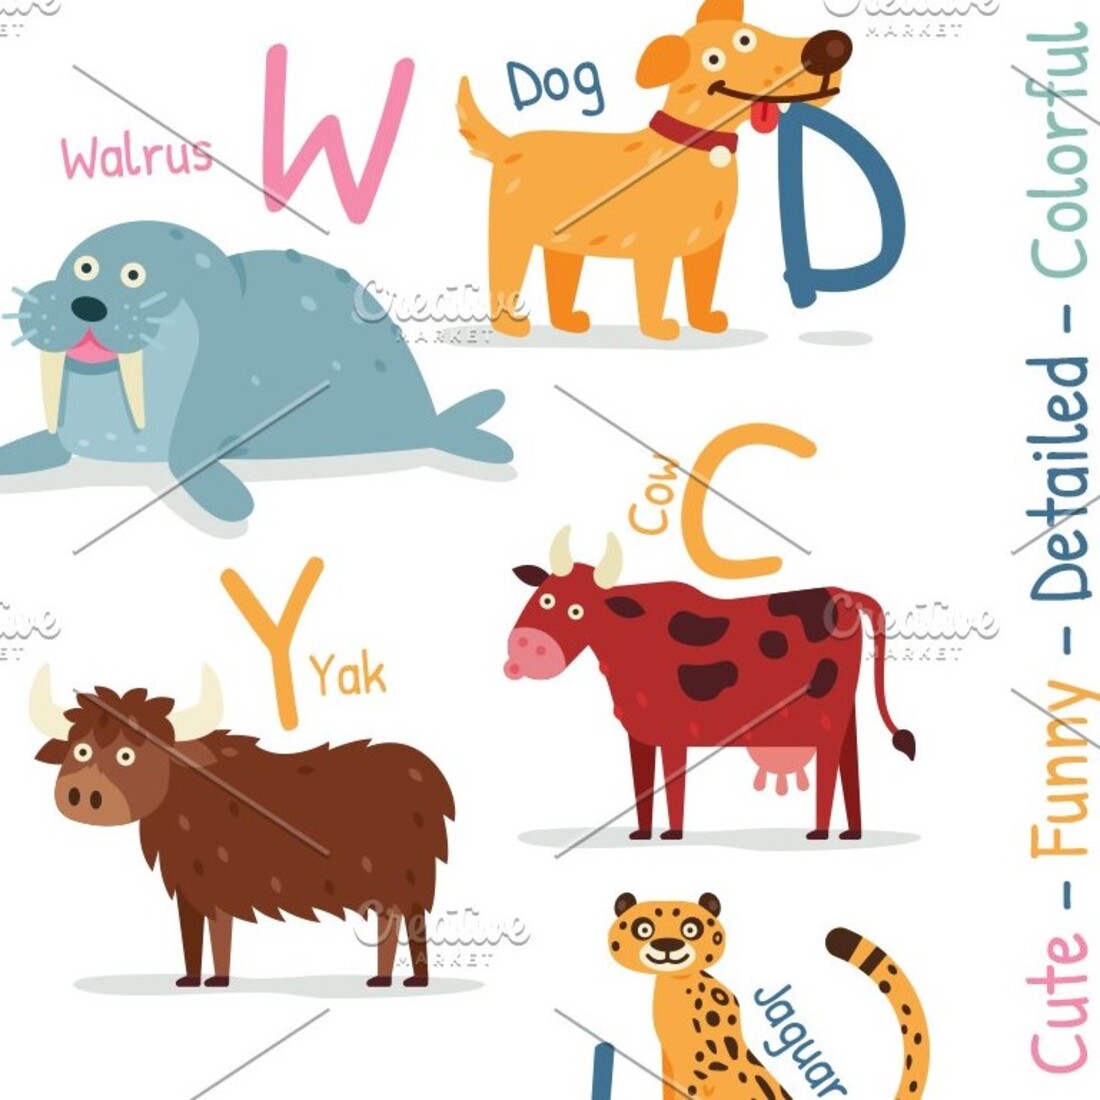 Animal Alphabet created by ManuelCorsi.